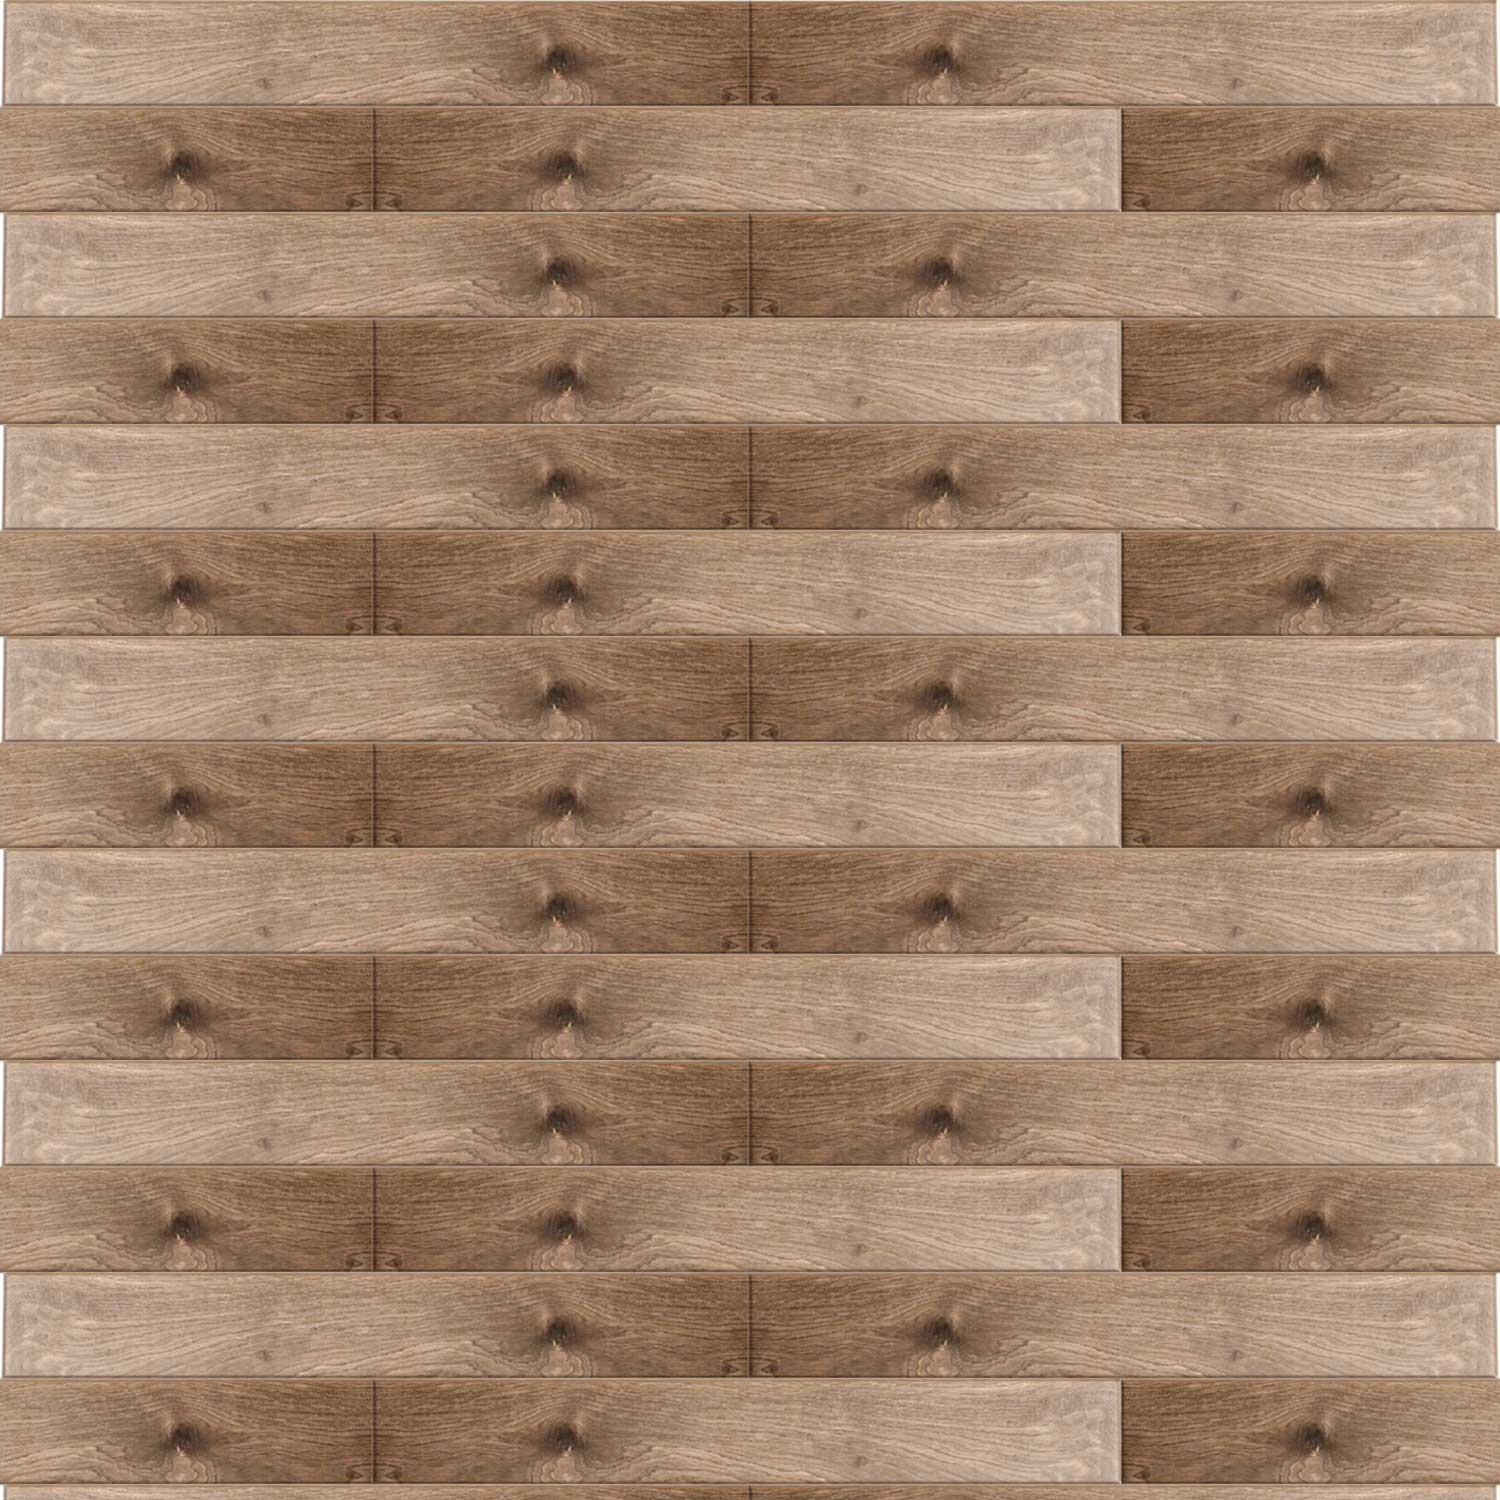 Forest Brown Porcelain Plank Tile Walls Floor R9 Wood Effect 100x700mm